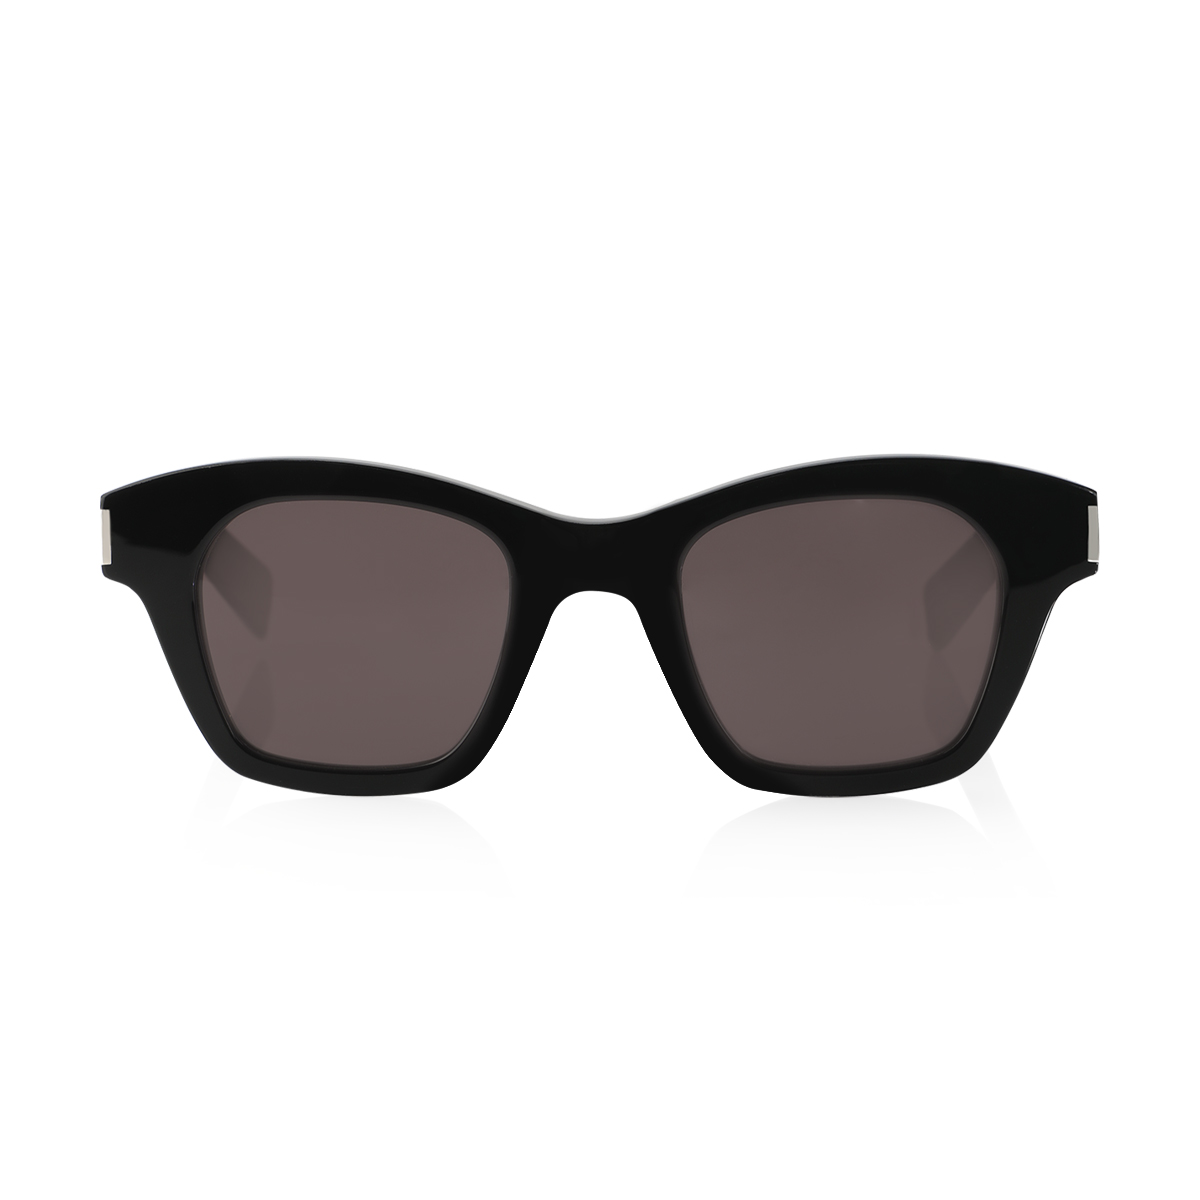 Buy Rectangular Black Sunglasses Online in United Arab Emirates | Boutiqaat